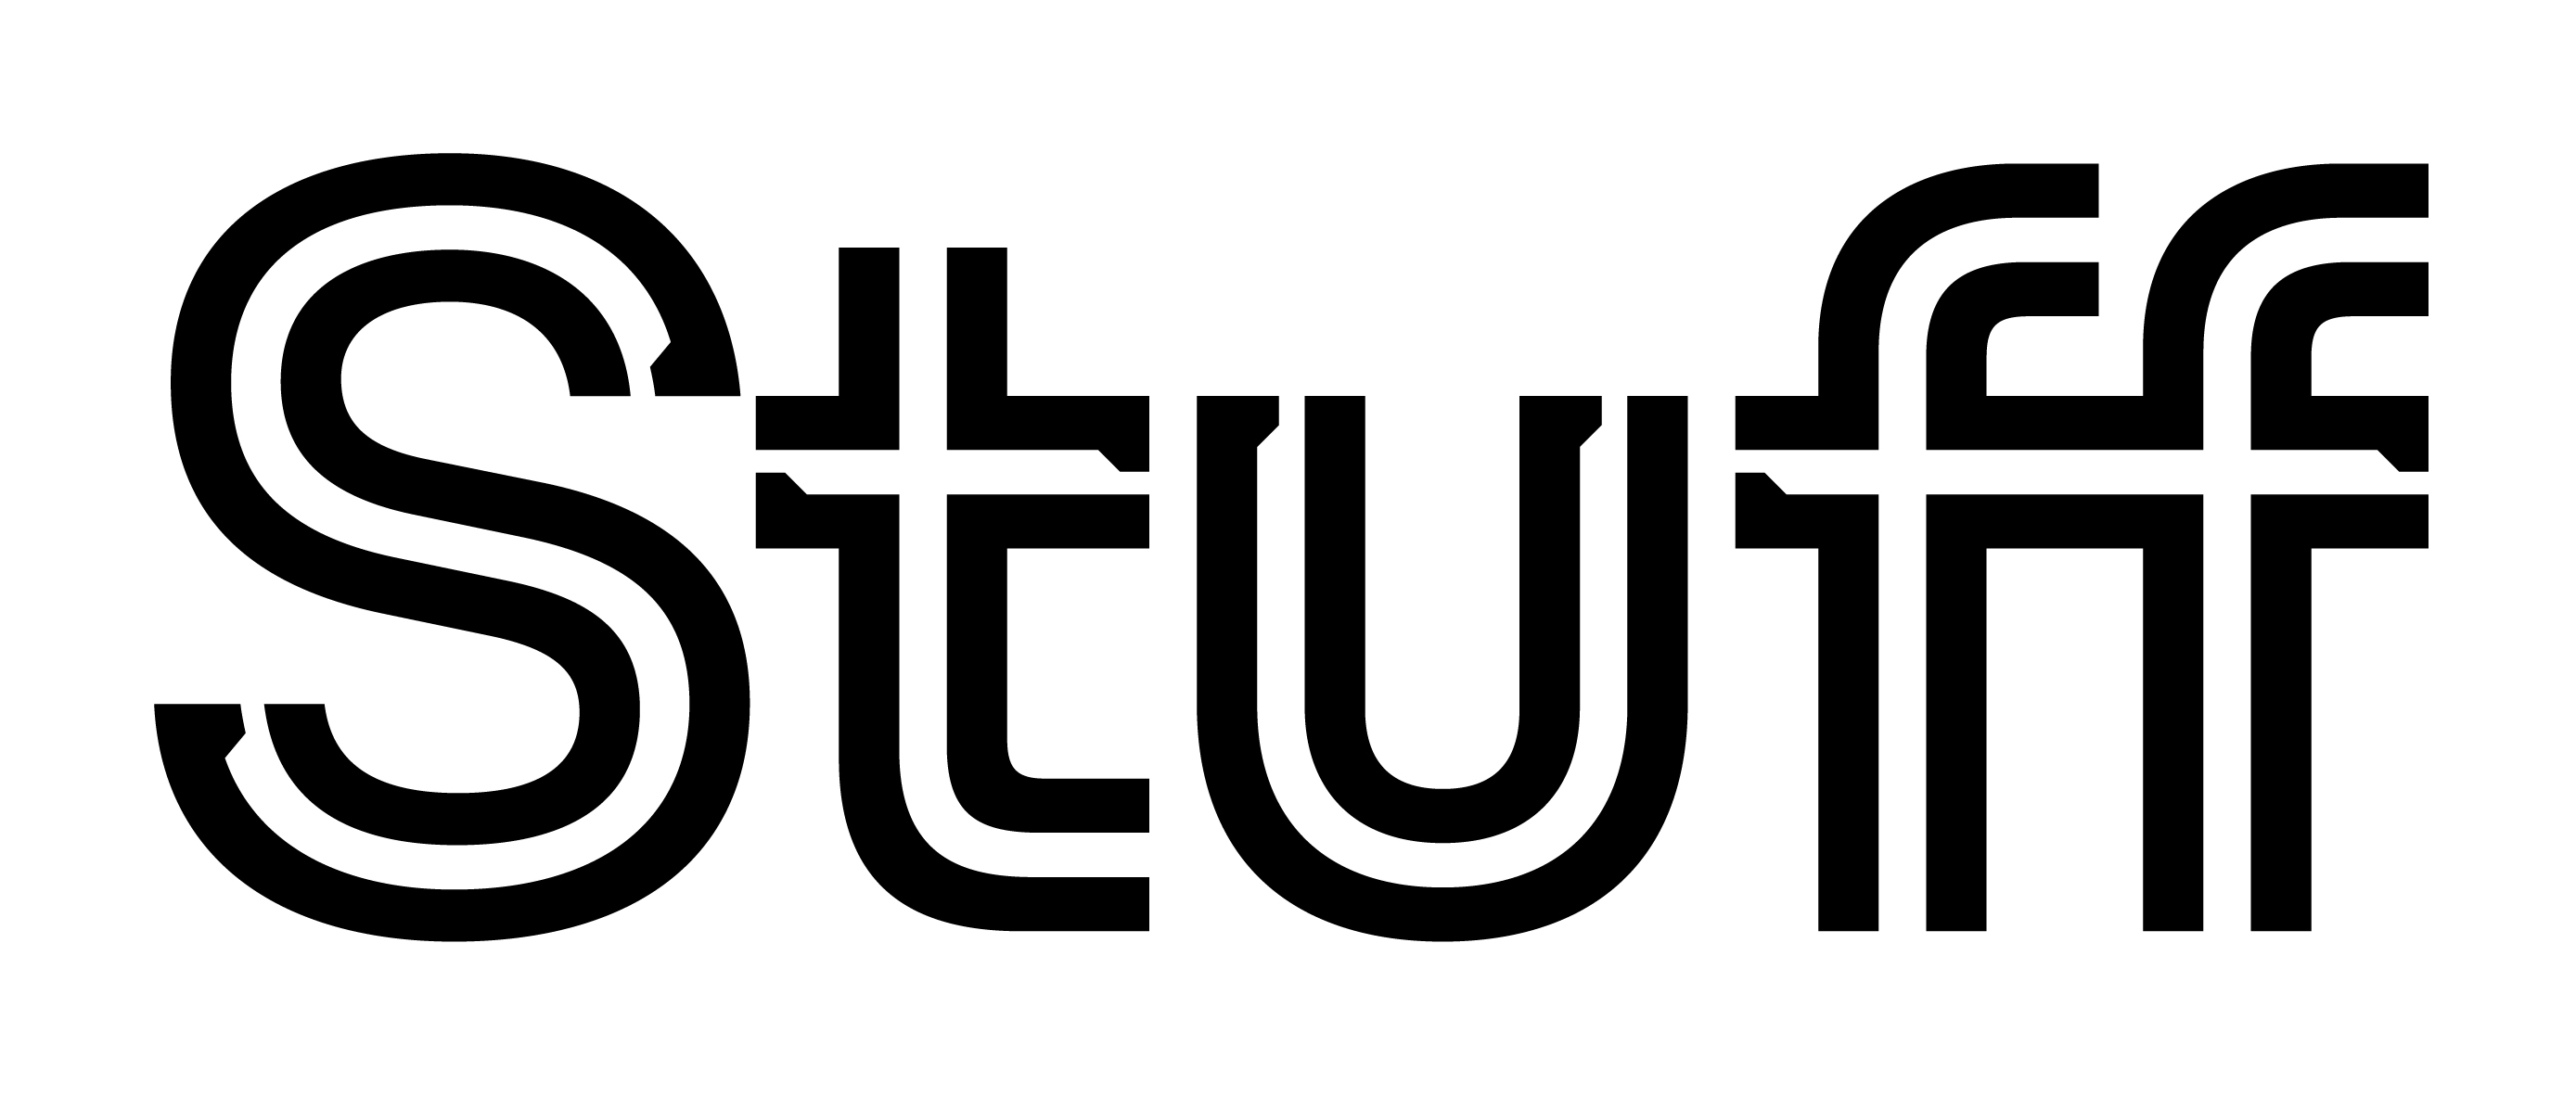 Stuff Limited logo